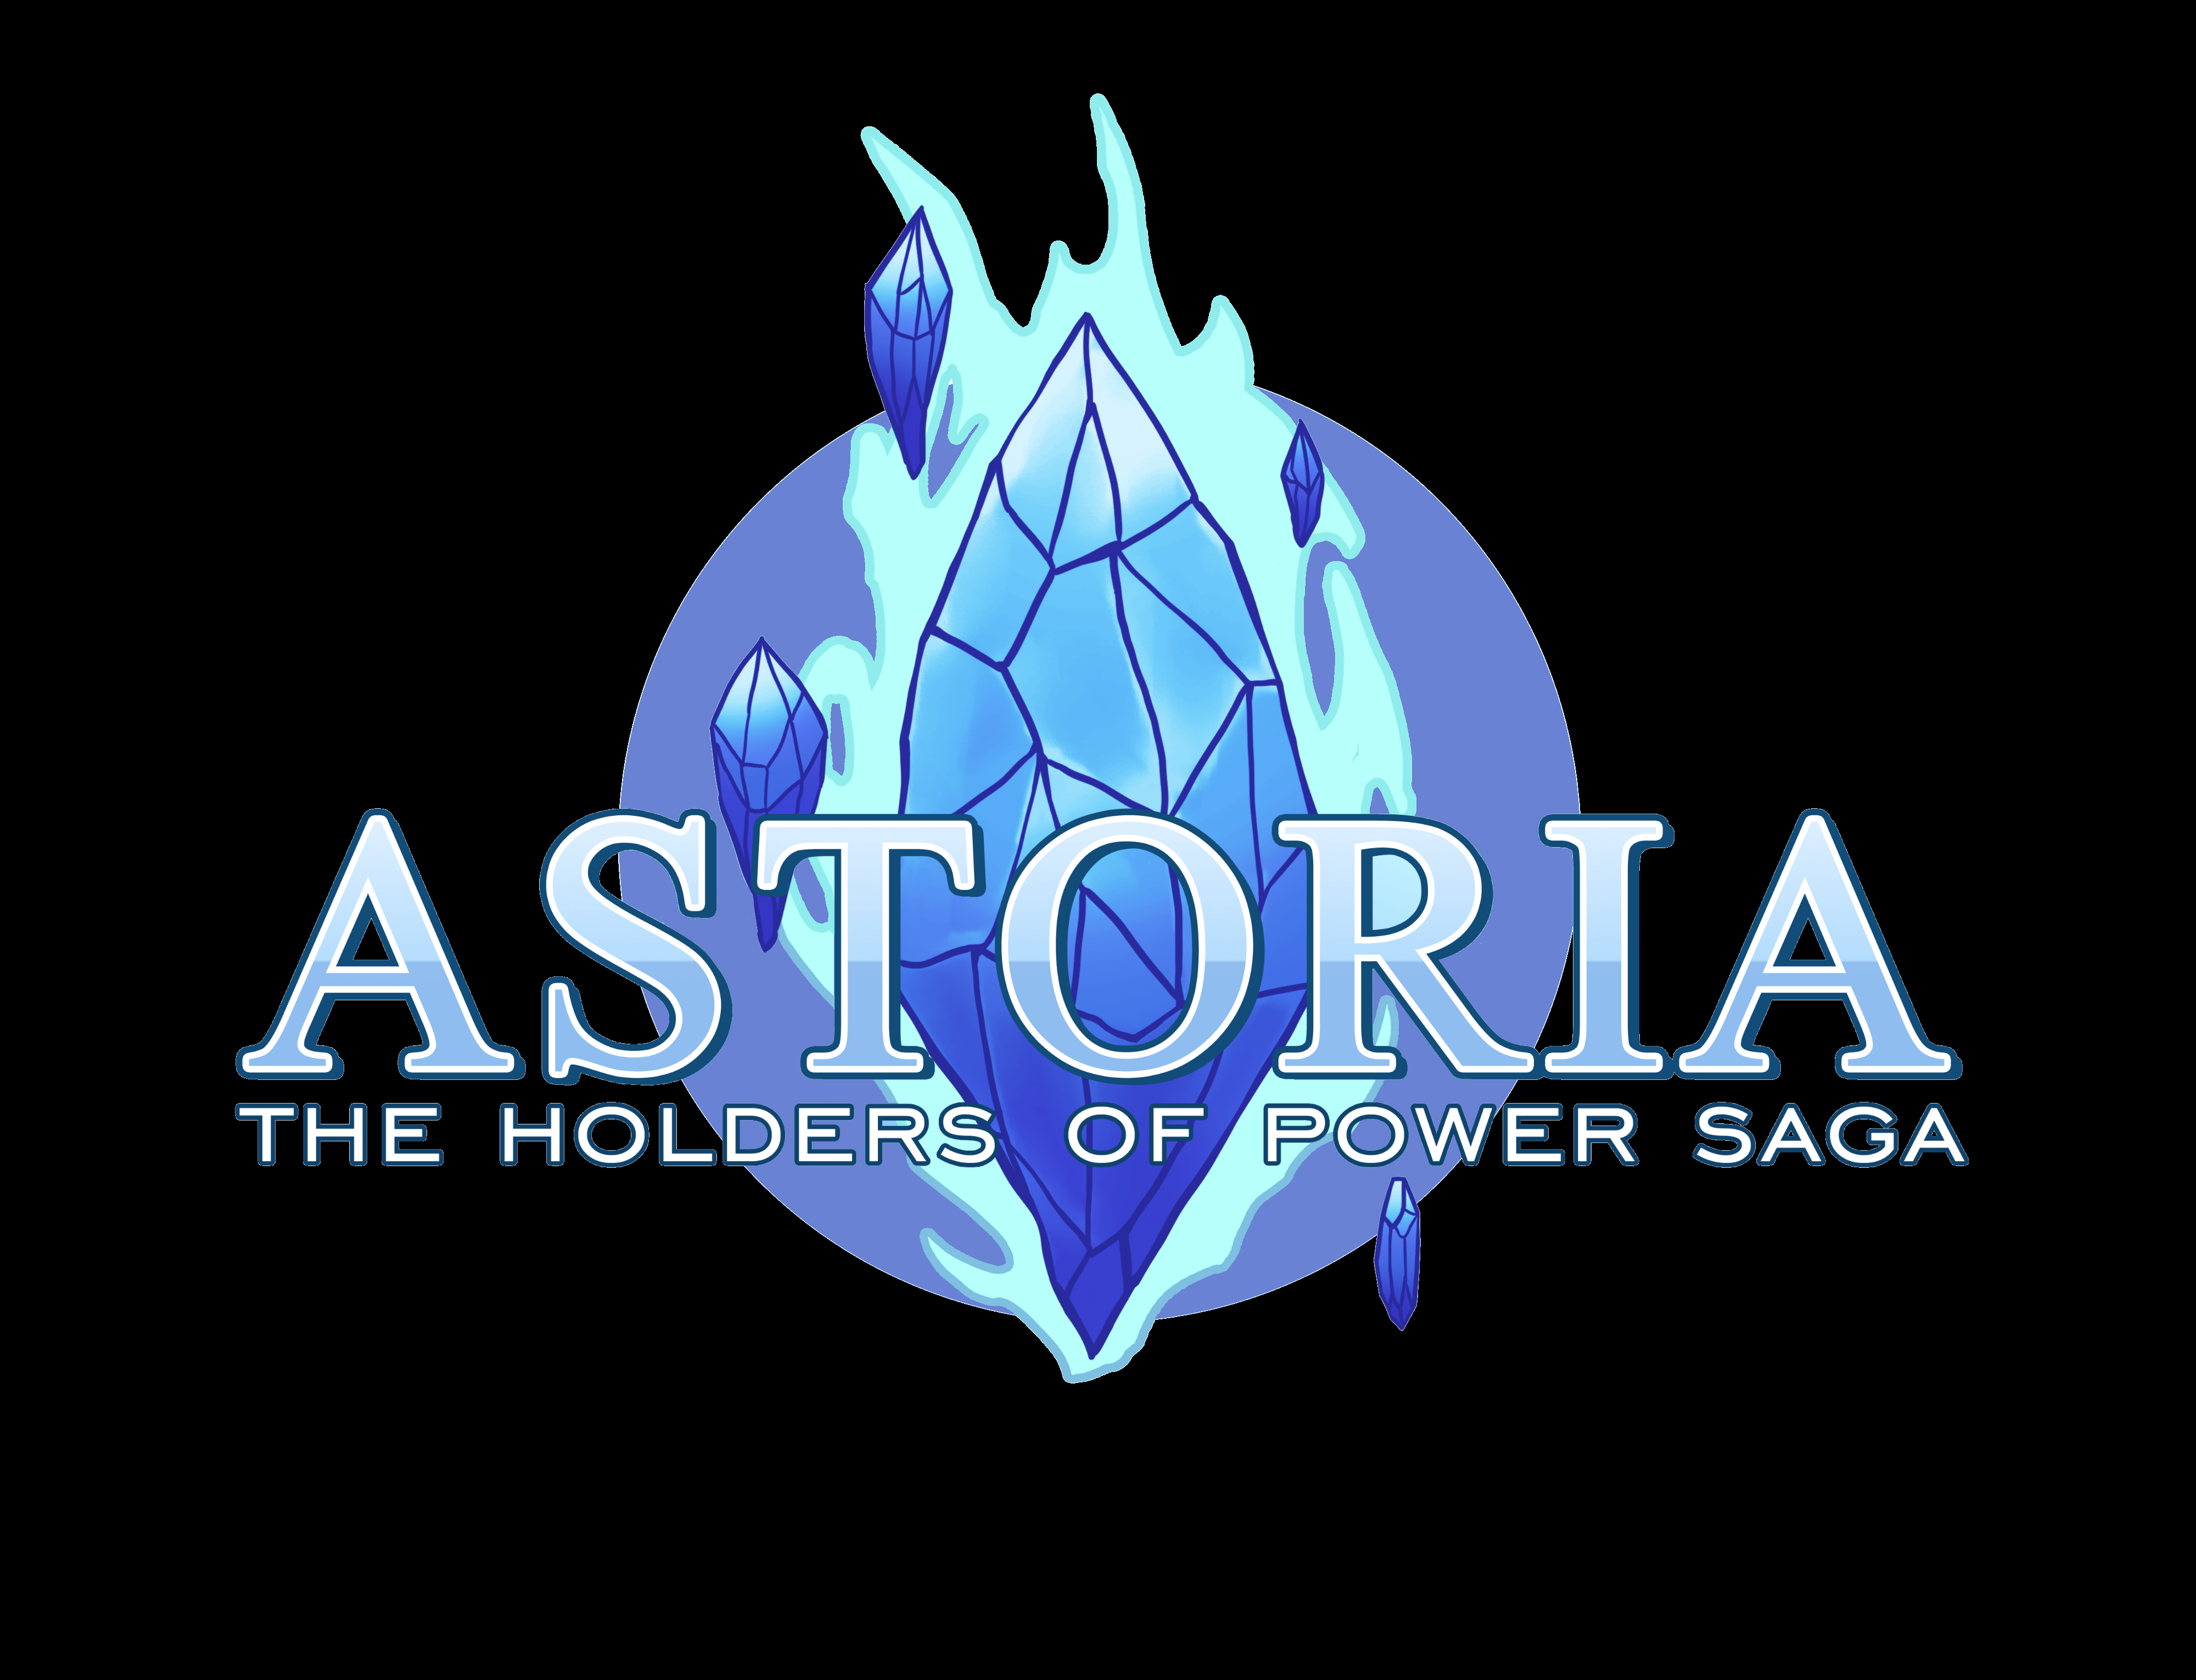 Astoria: The Holders of Power Saga